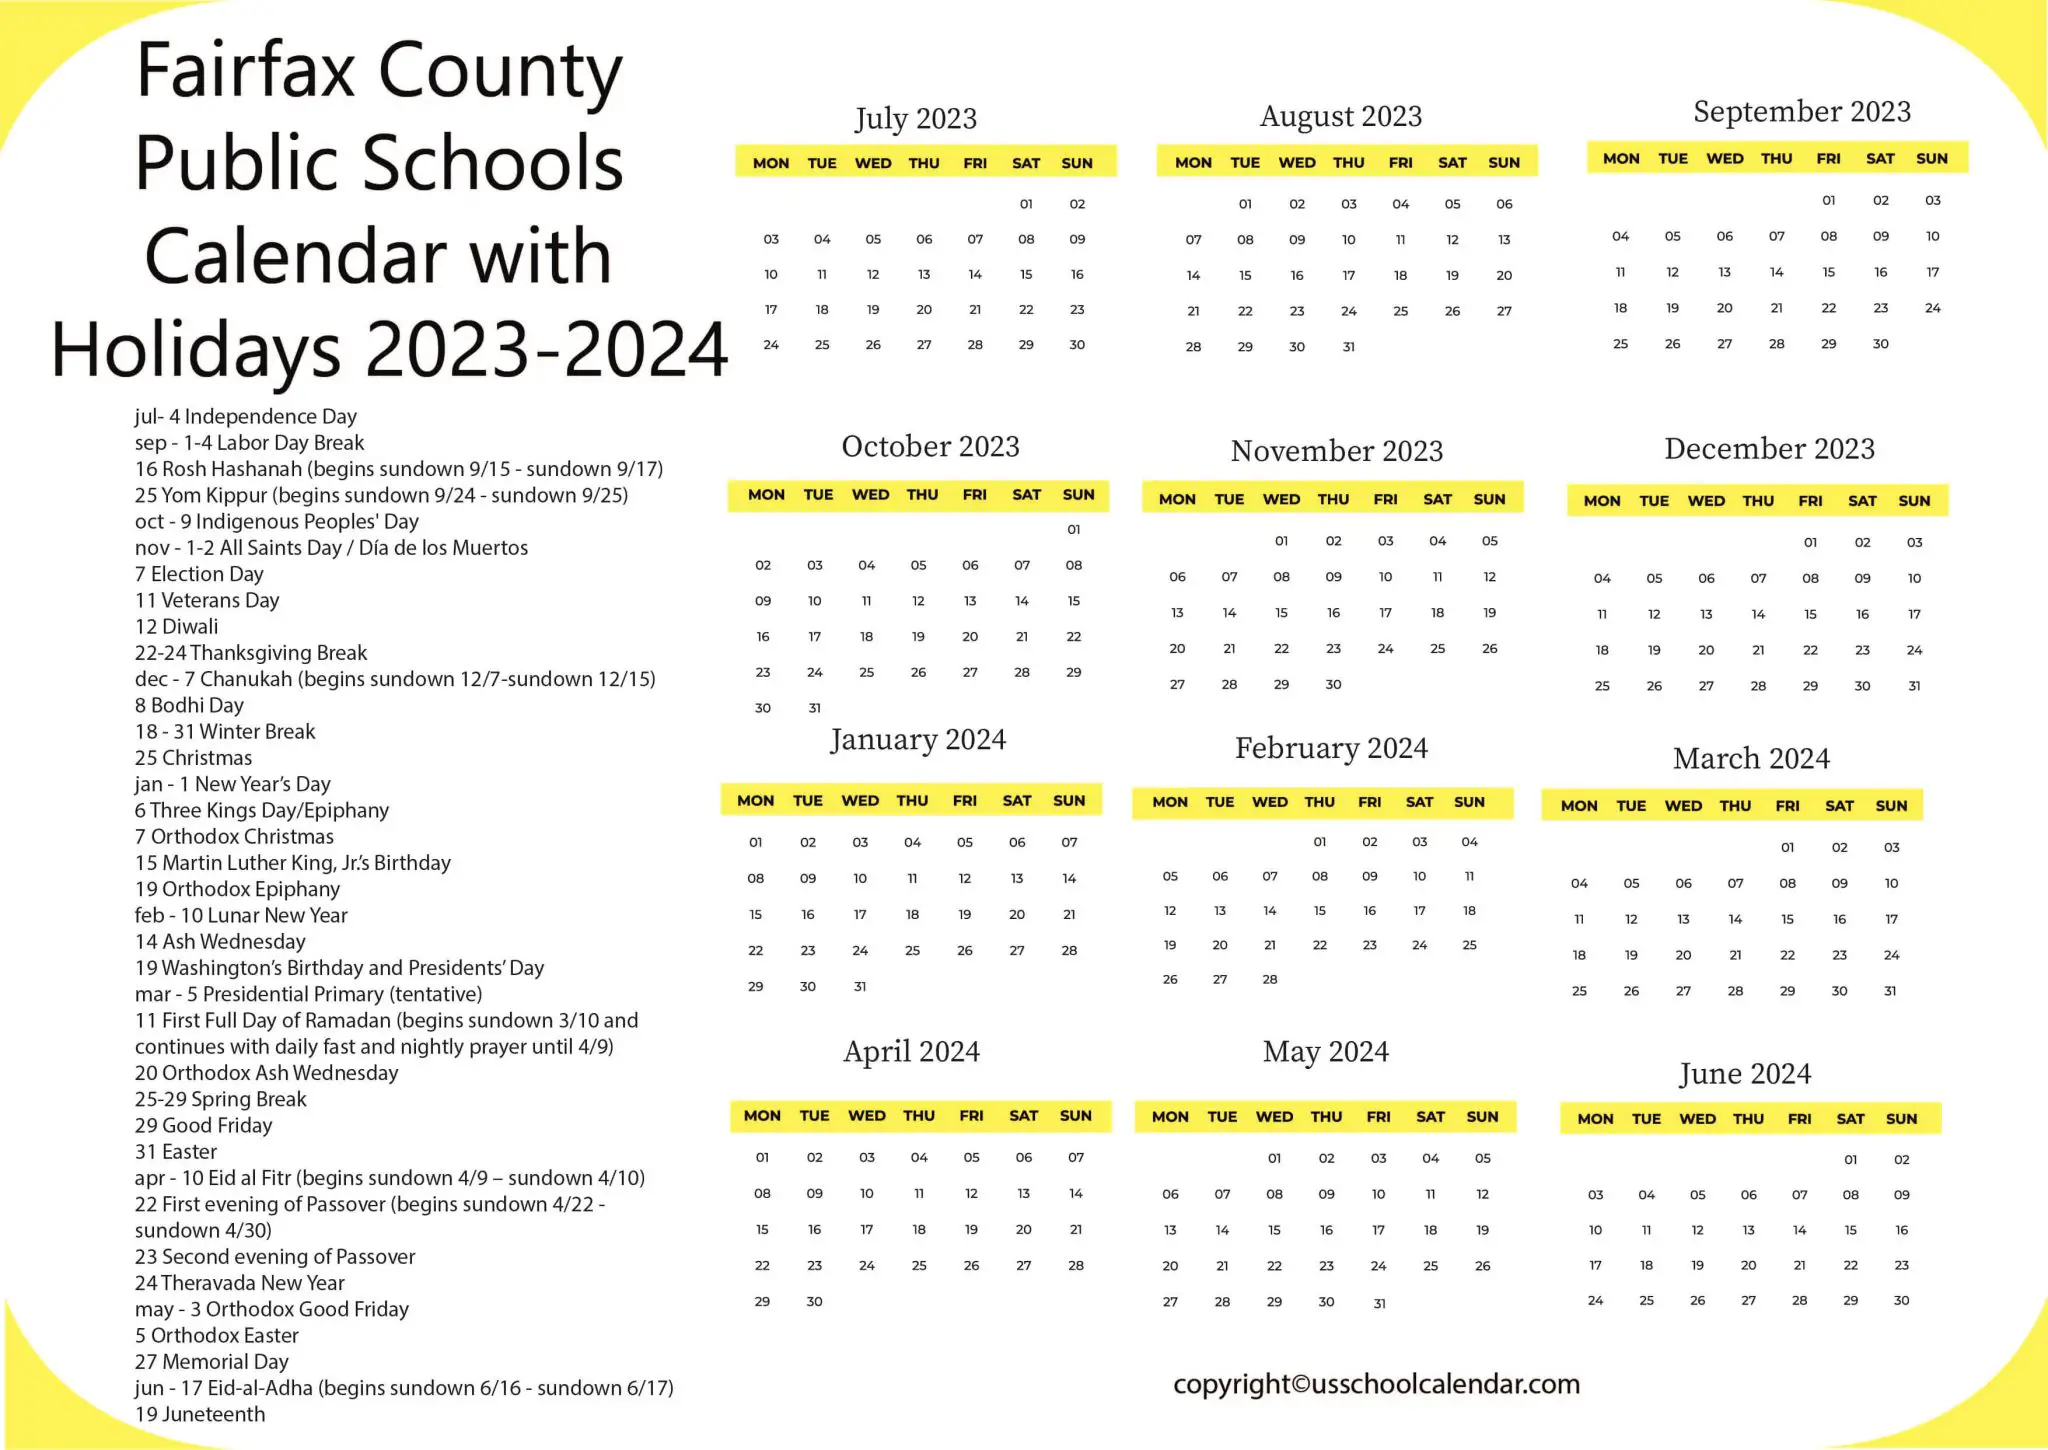 fairfax-county-public-schools-calendar-with-holidays-2023-2024